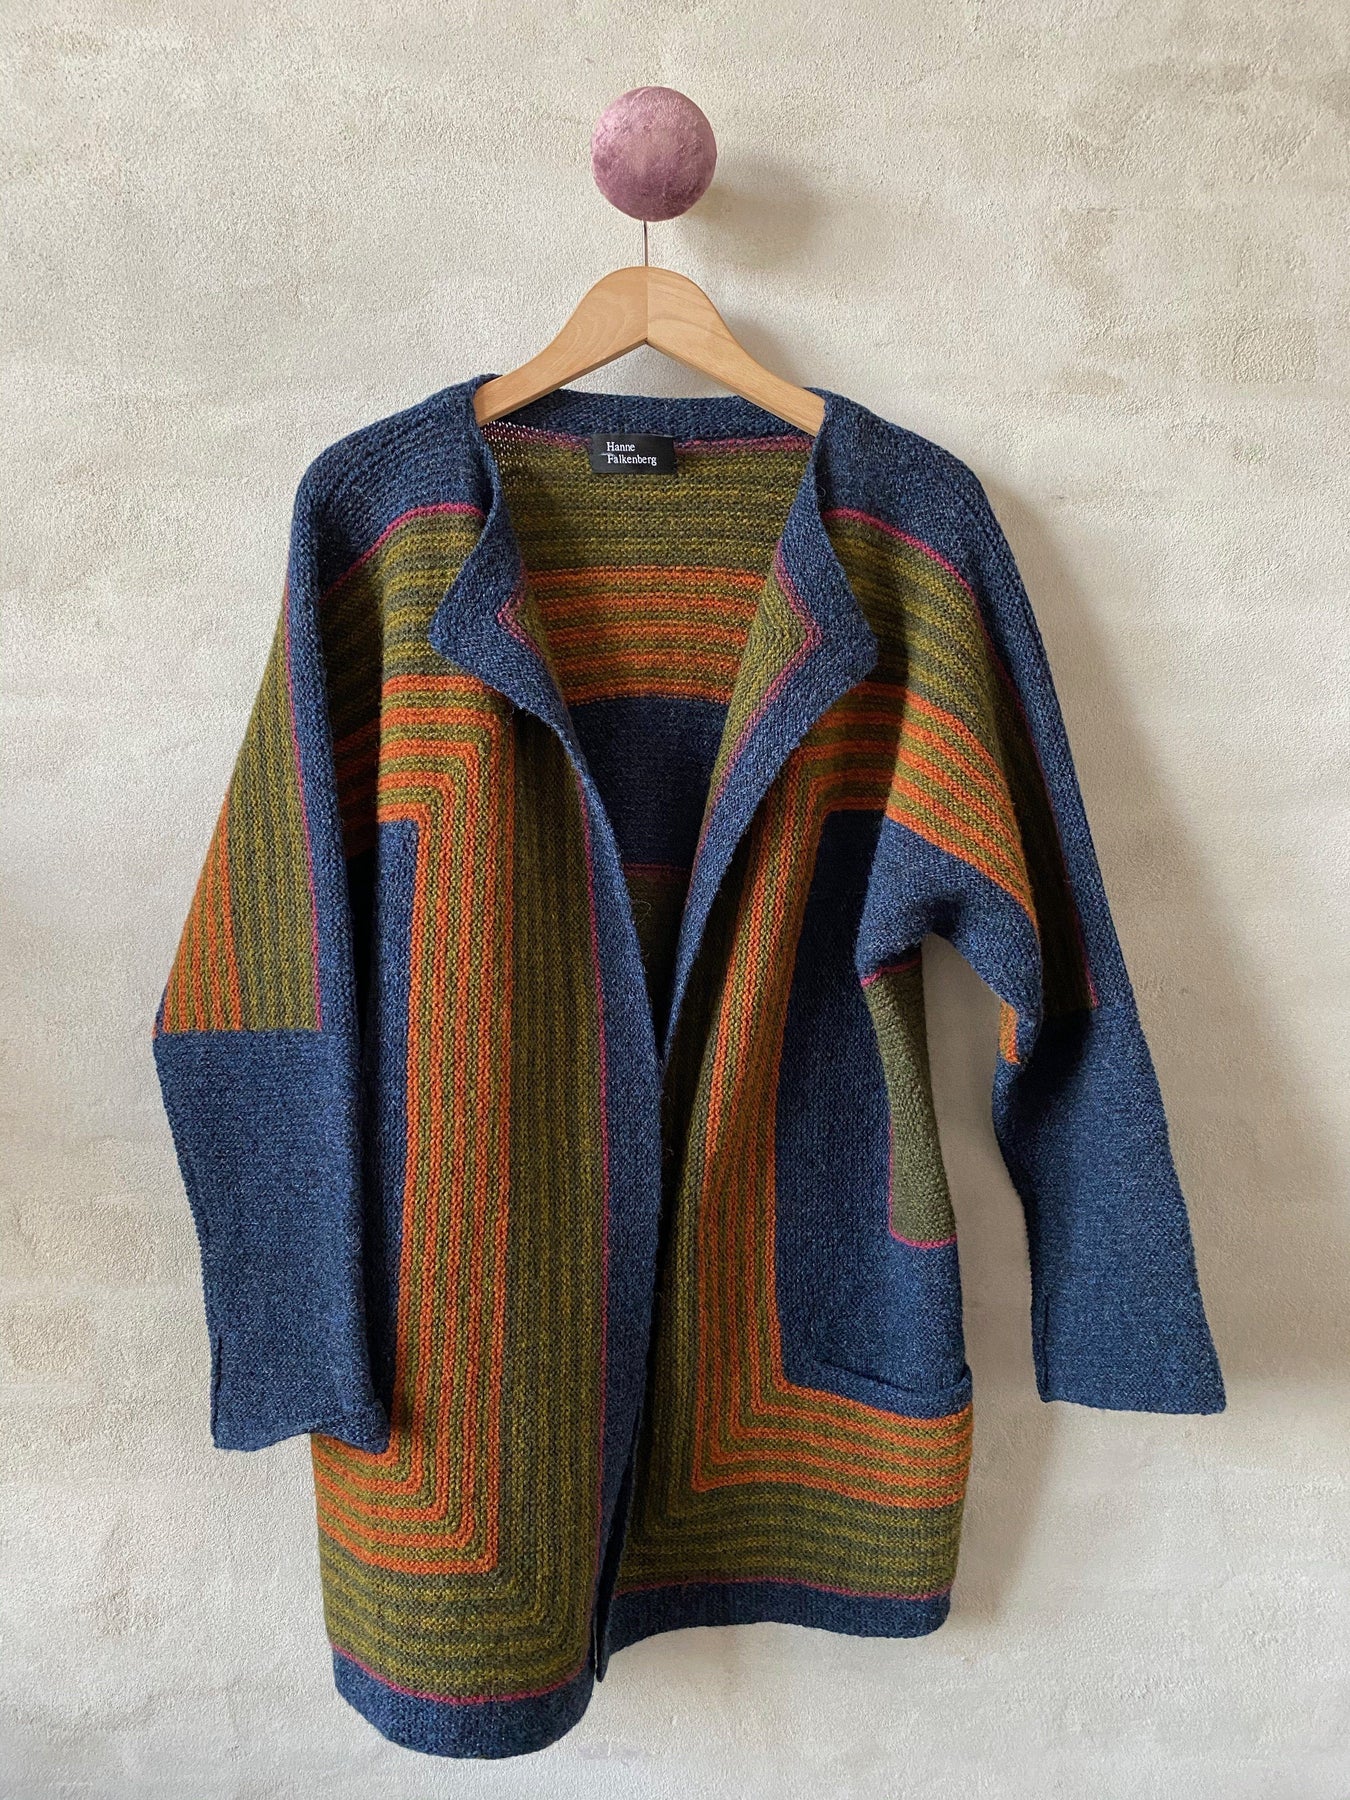 Pagode jacket by Hanne Falkenberg, No 20 knitting kit, 5 colors